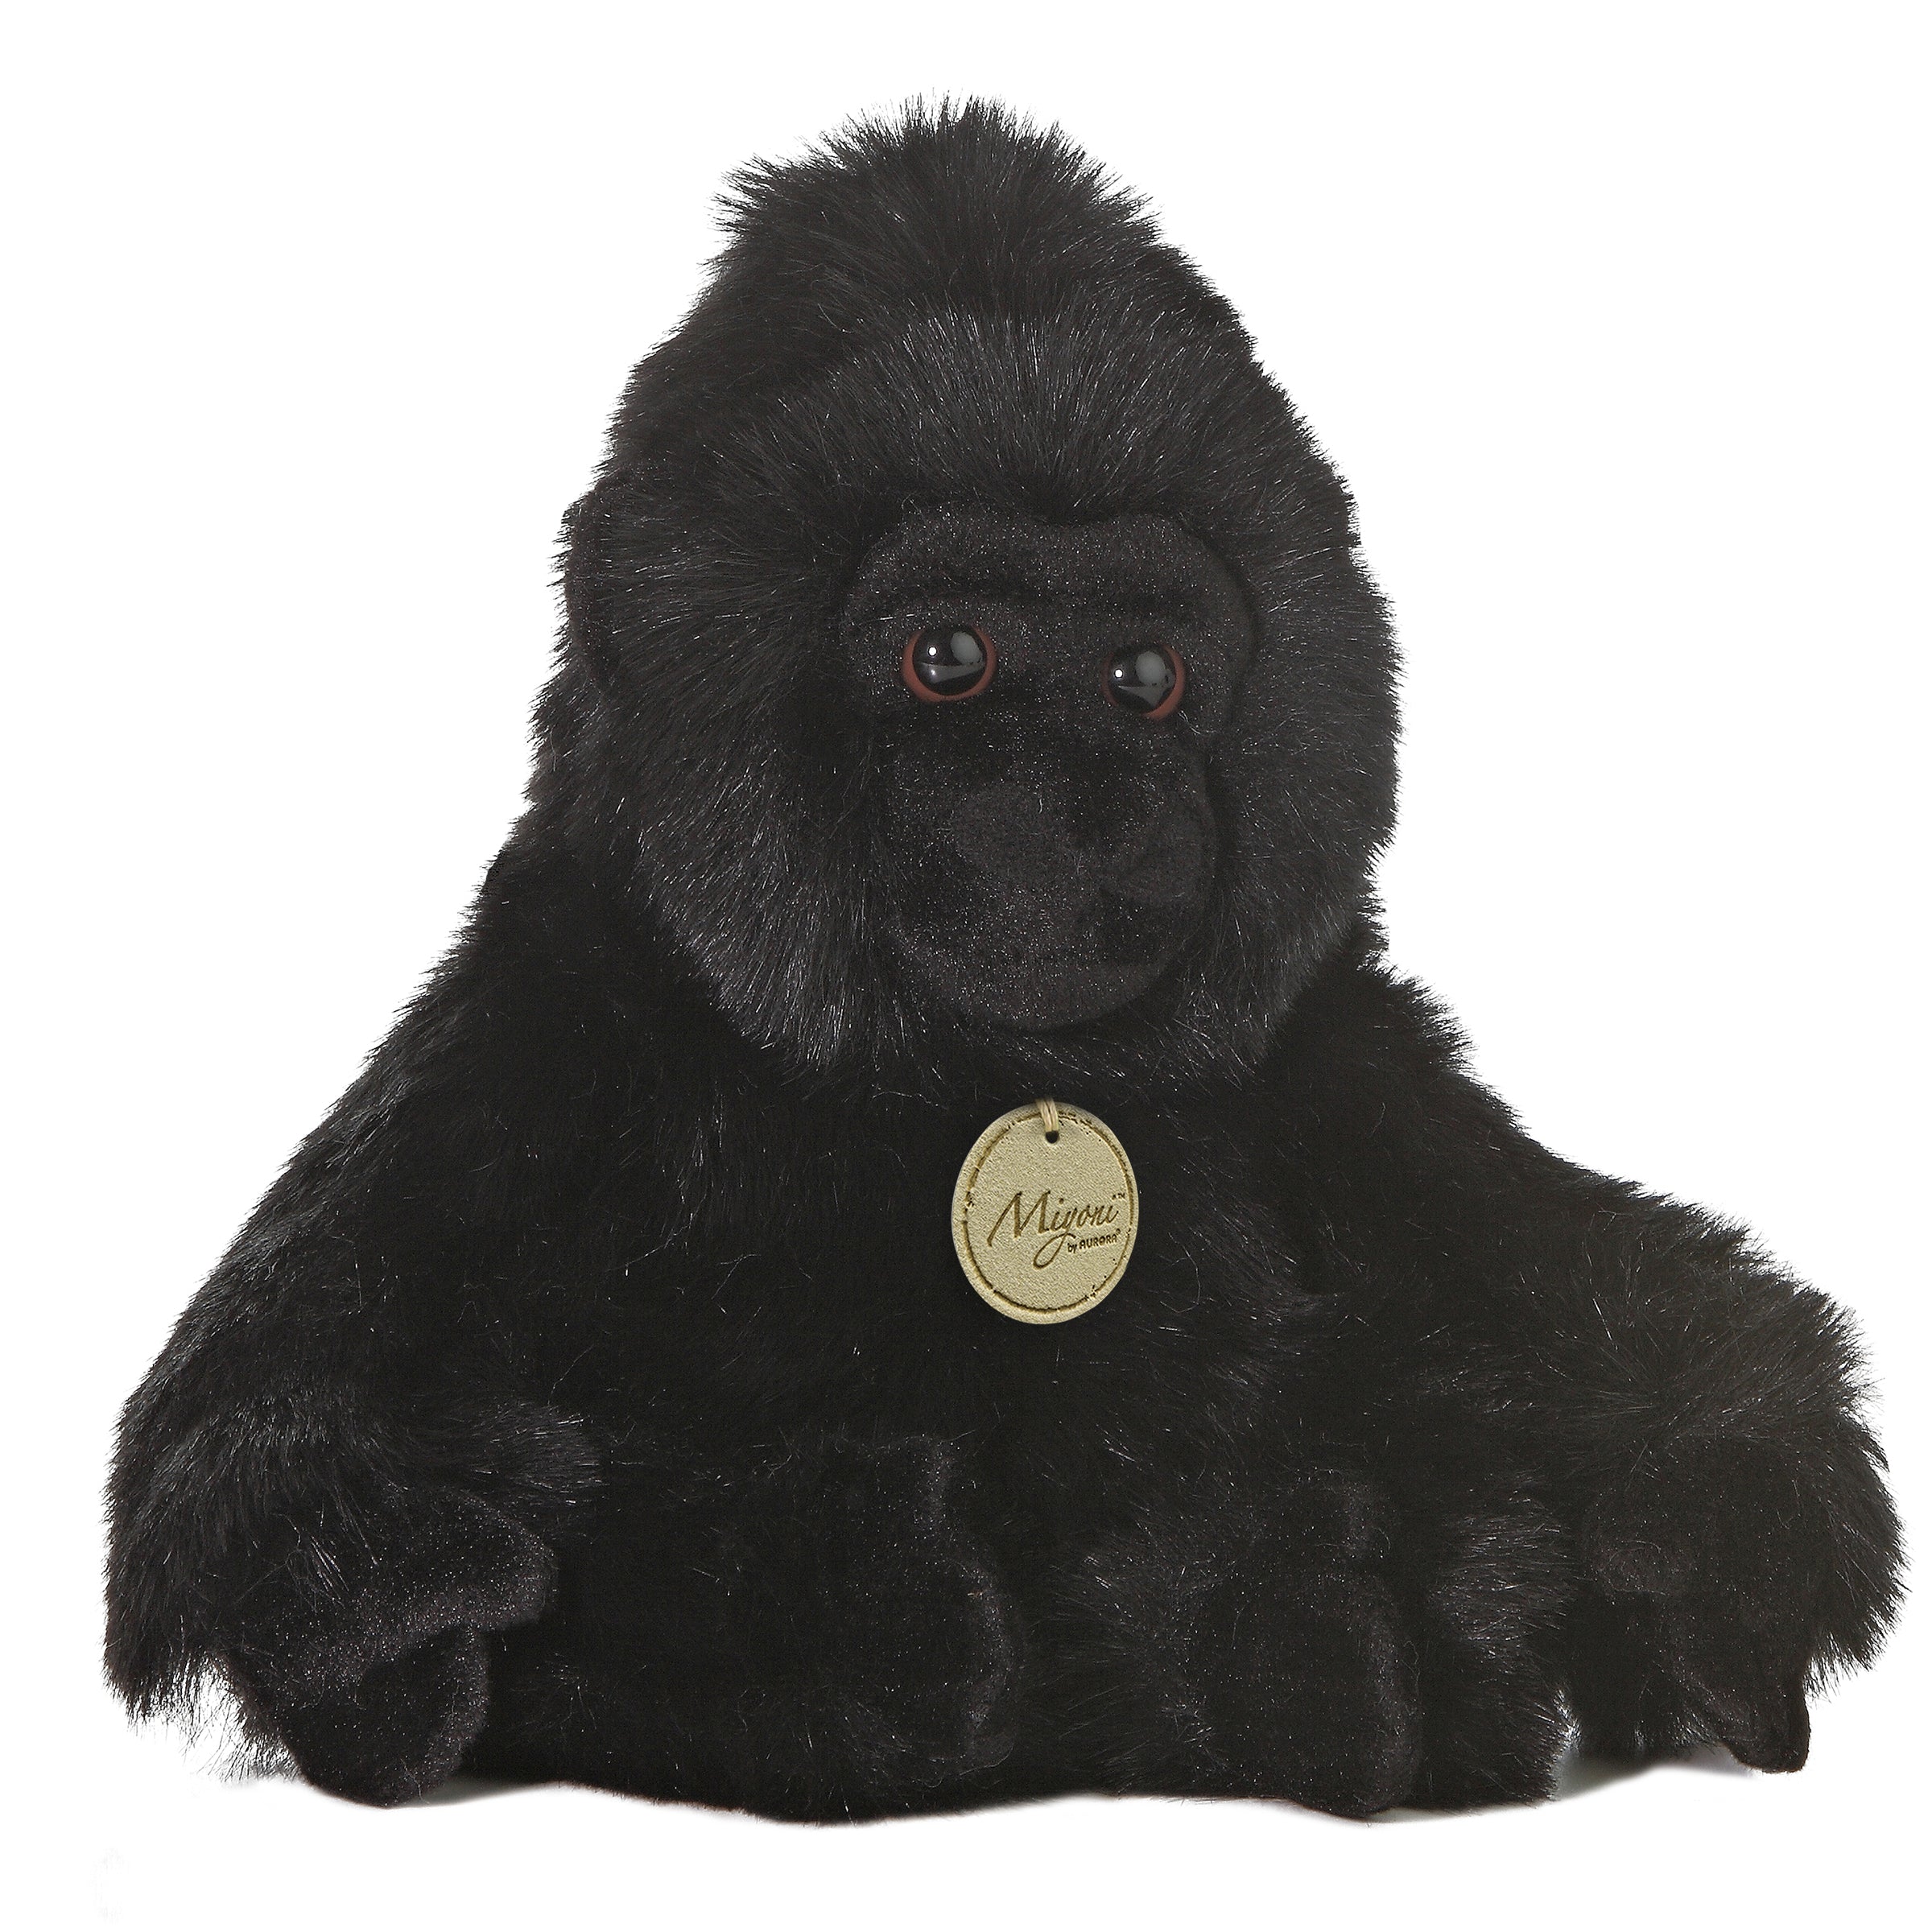 big gorilla stuffed animal